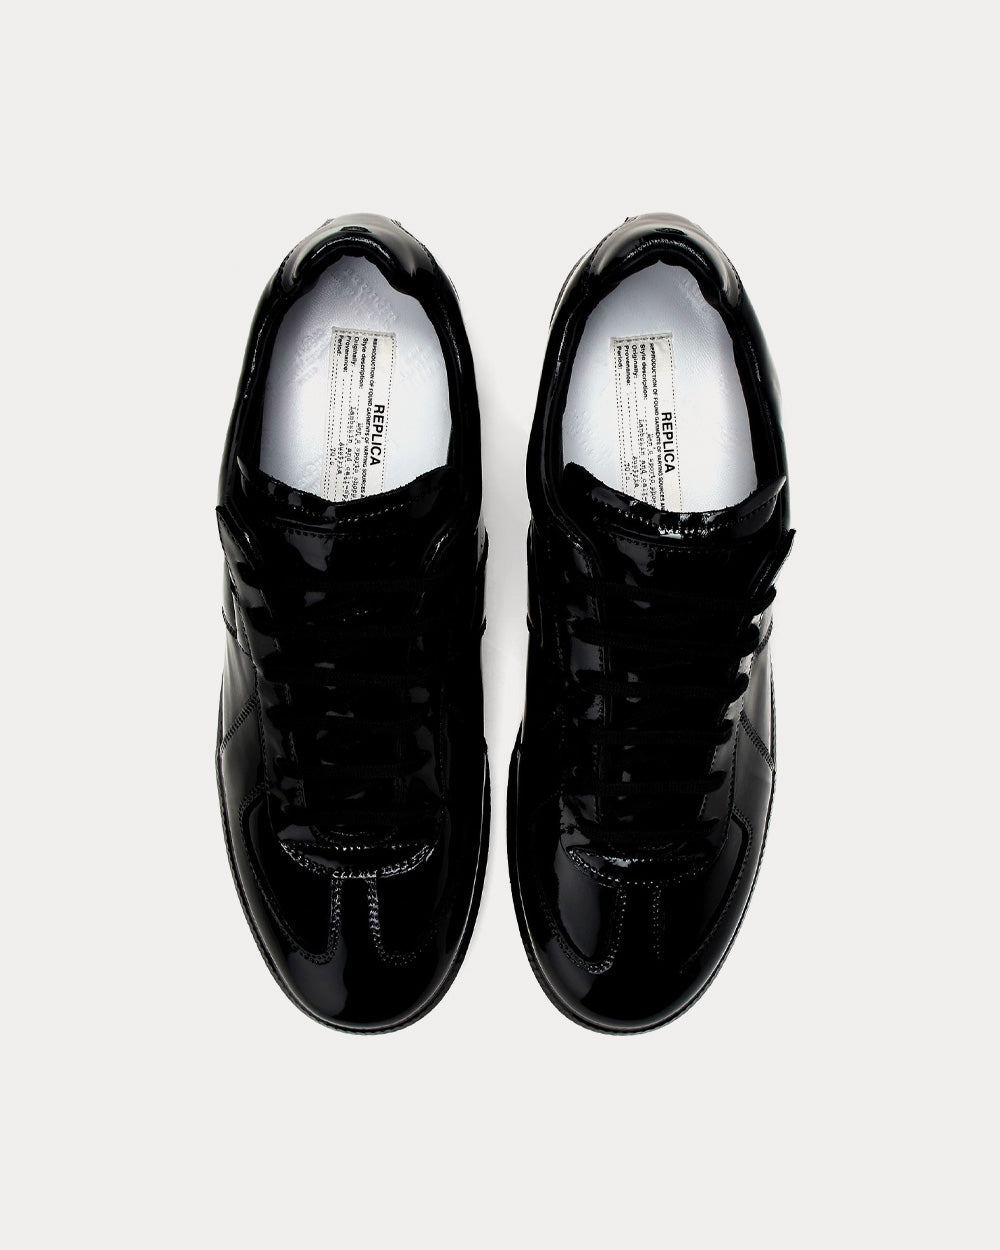 Maison Margiela Replica Rubber Coating Black Low Top Sneakers 